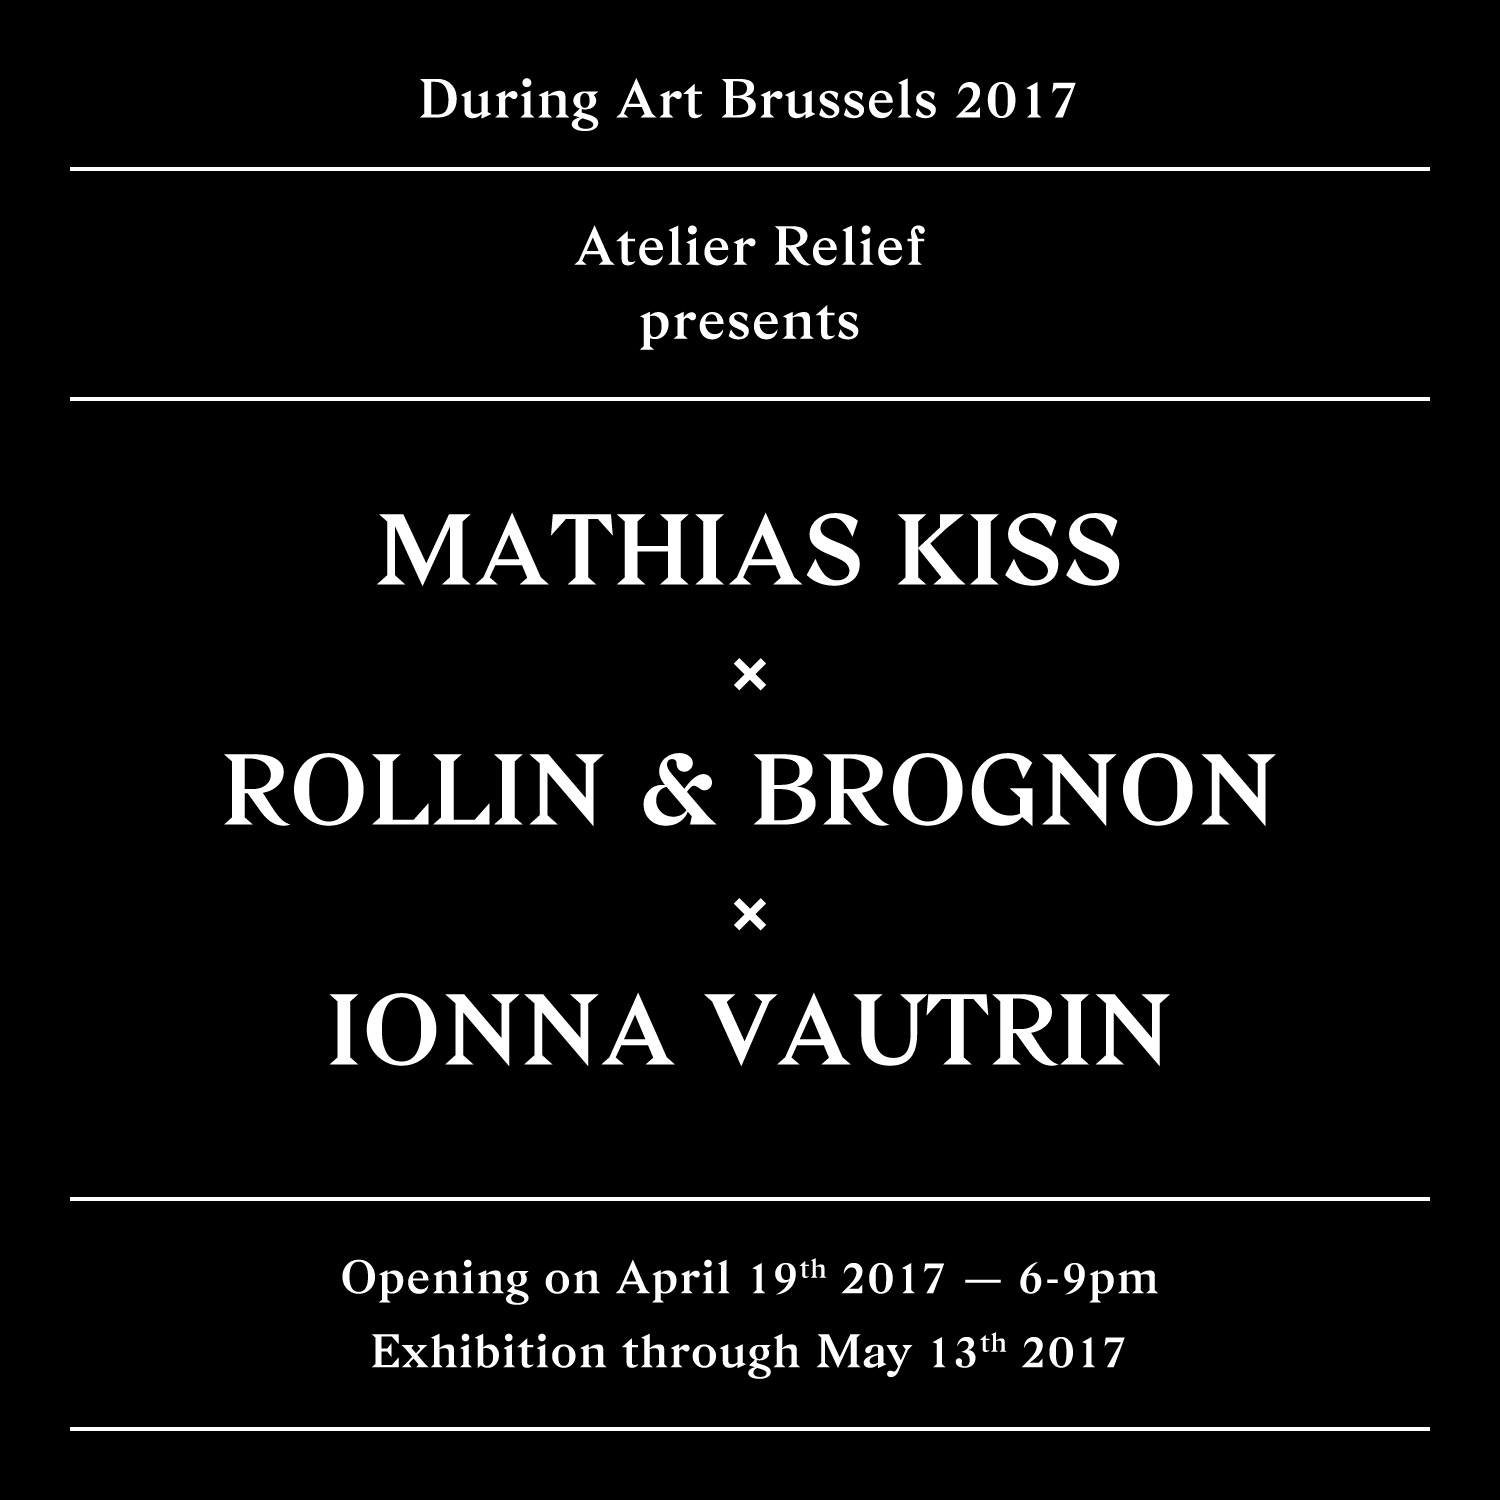 Atelier Relief presents Mathias Kiss, Rollin & Brognon and Ionna Vautrin